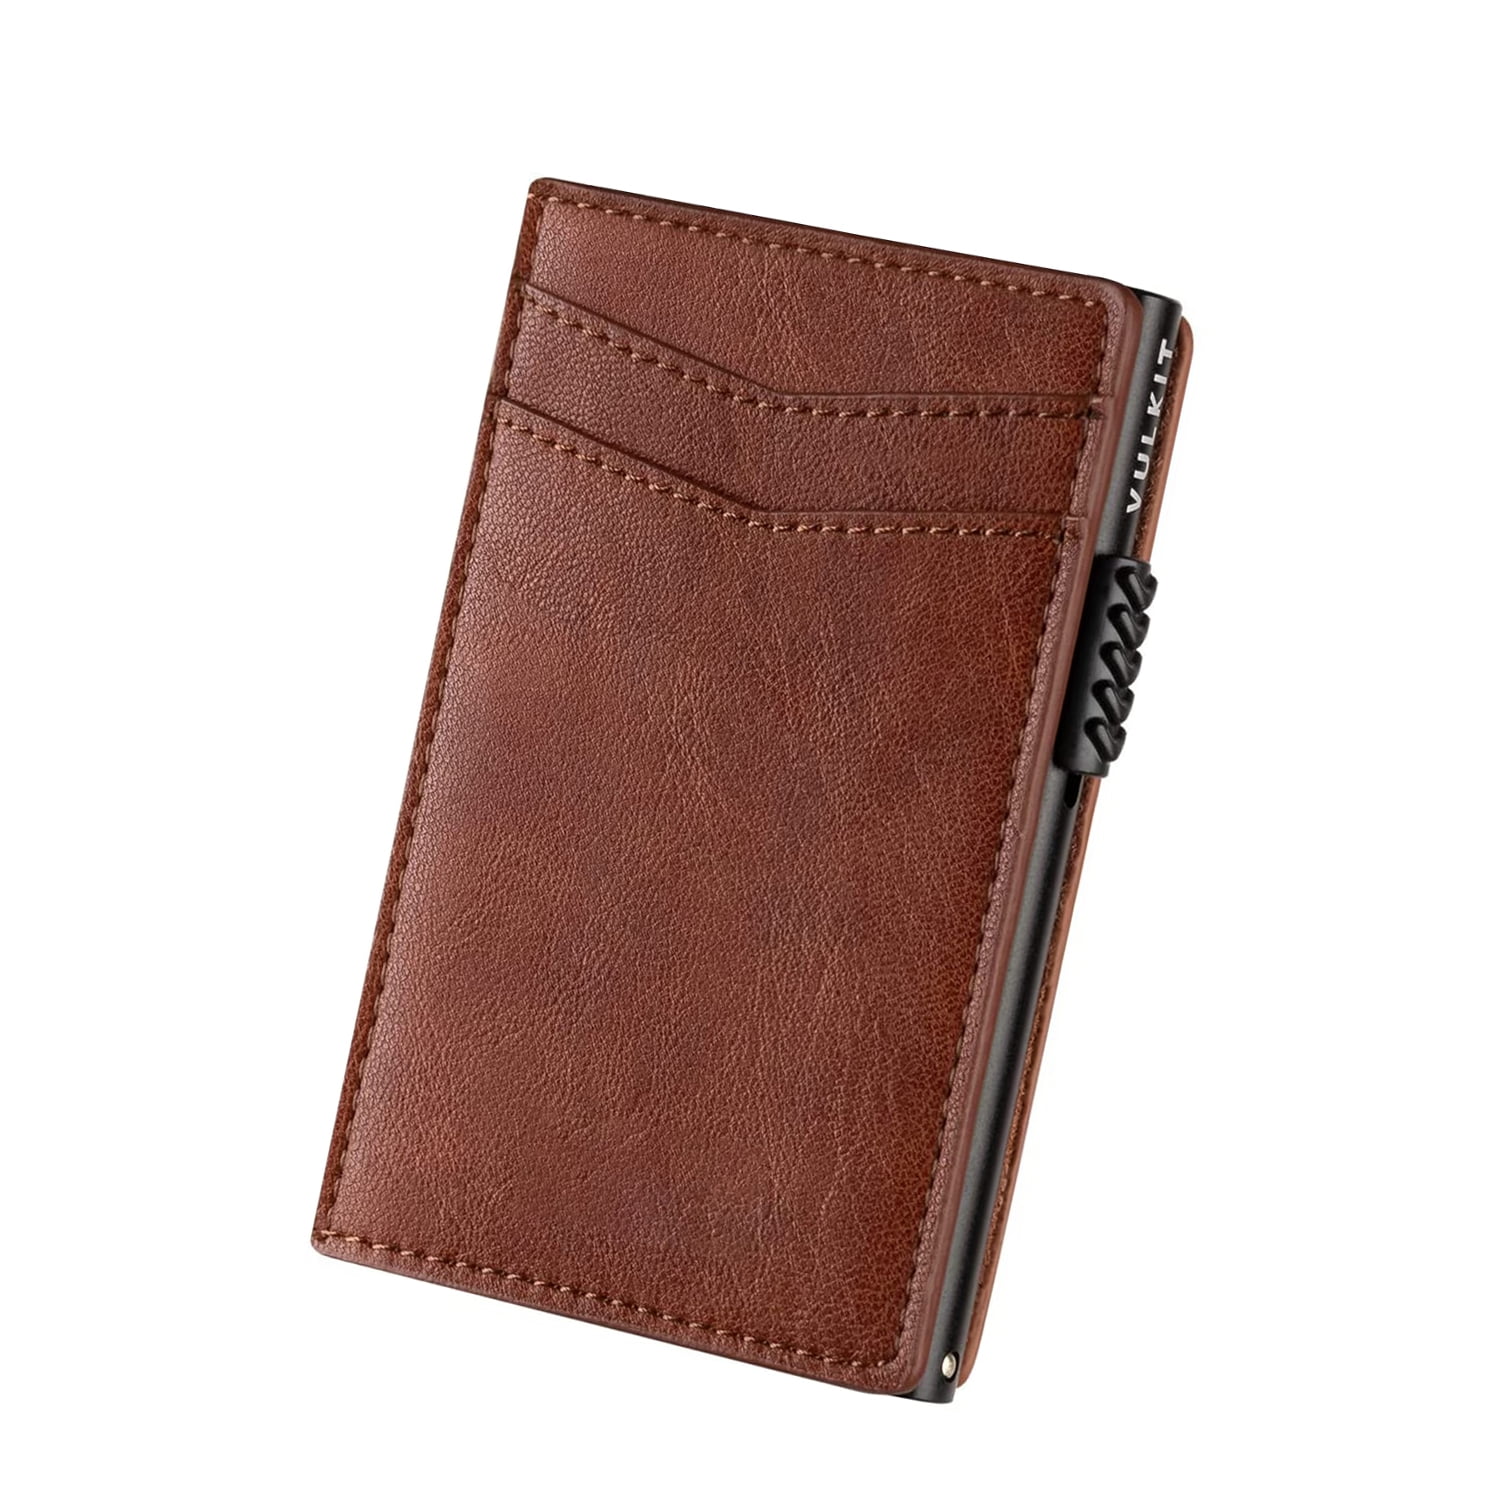  ManChDa Genuine Leather Wallet Slim RFID Blocking Magnetic  Wallet for Men Trifold Wallet Aluminum Detachable Wallet Pop up Card Wallet  Card Case Holder Clip Money Organizer(Grey 2) : Clothing, Shoes 